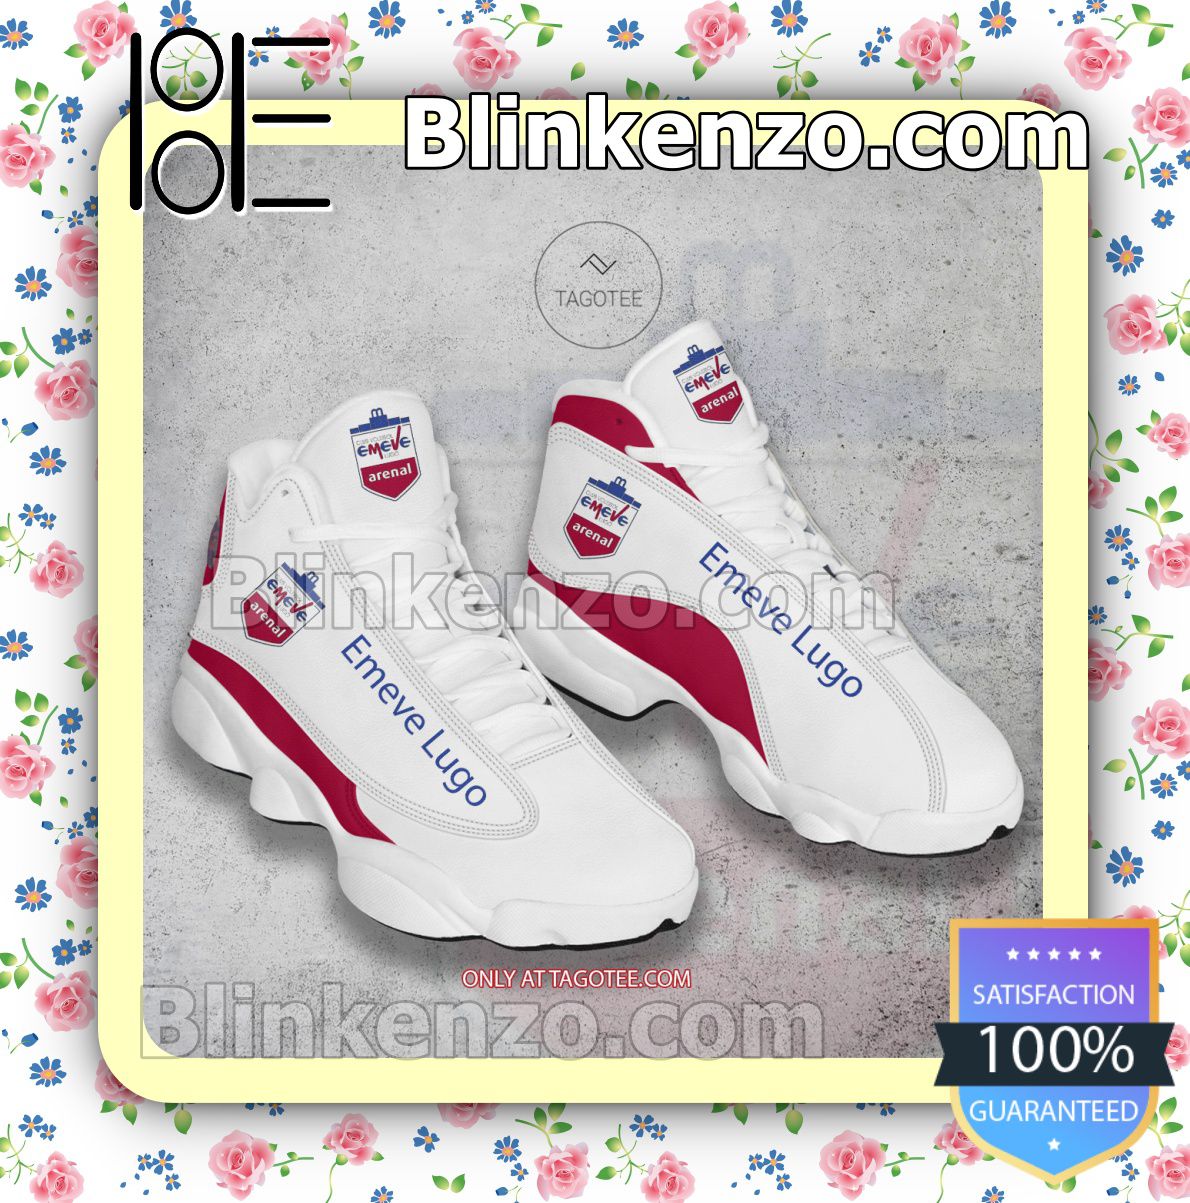 Emeve Lugo Volleyball Nike Running Sneakers Blinkenzo